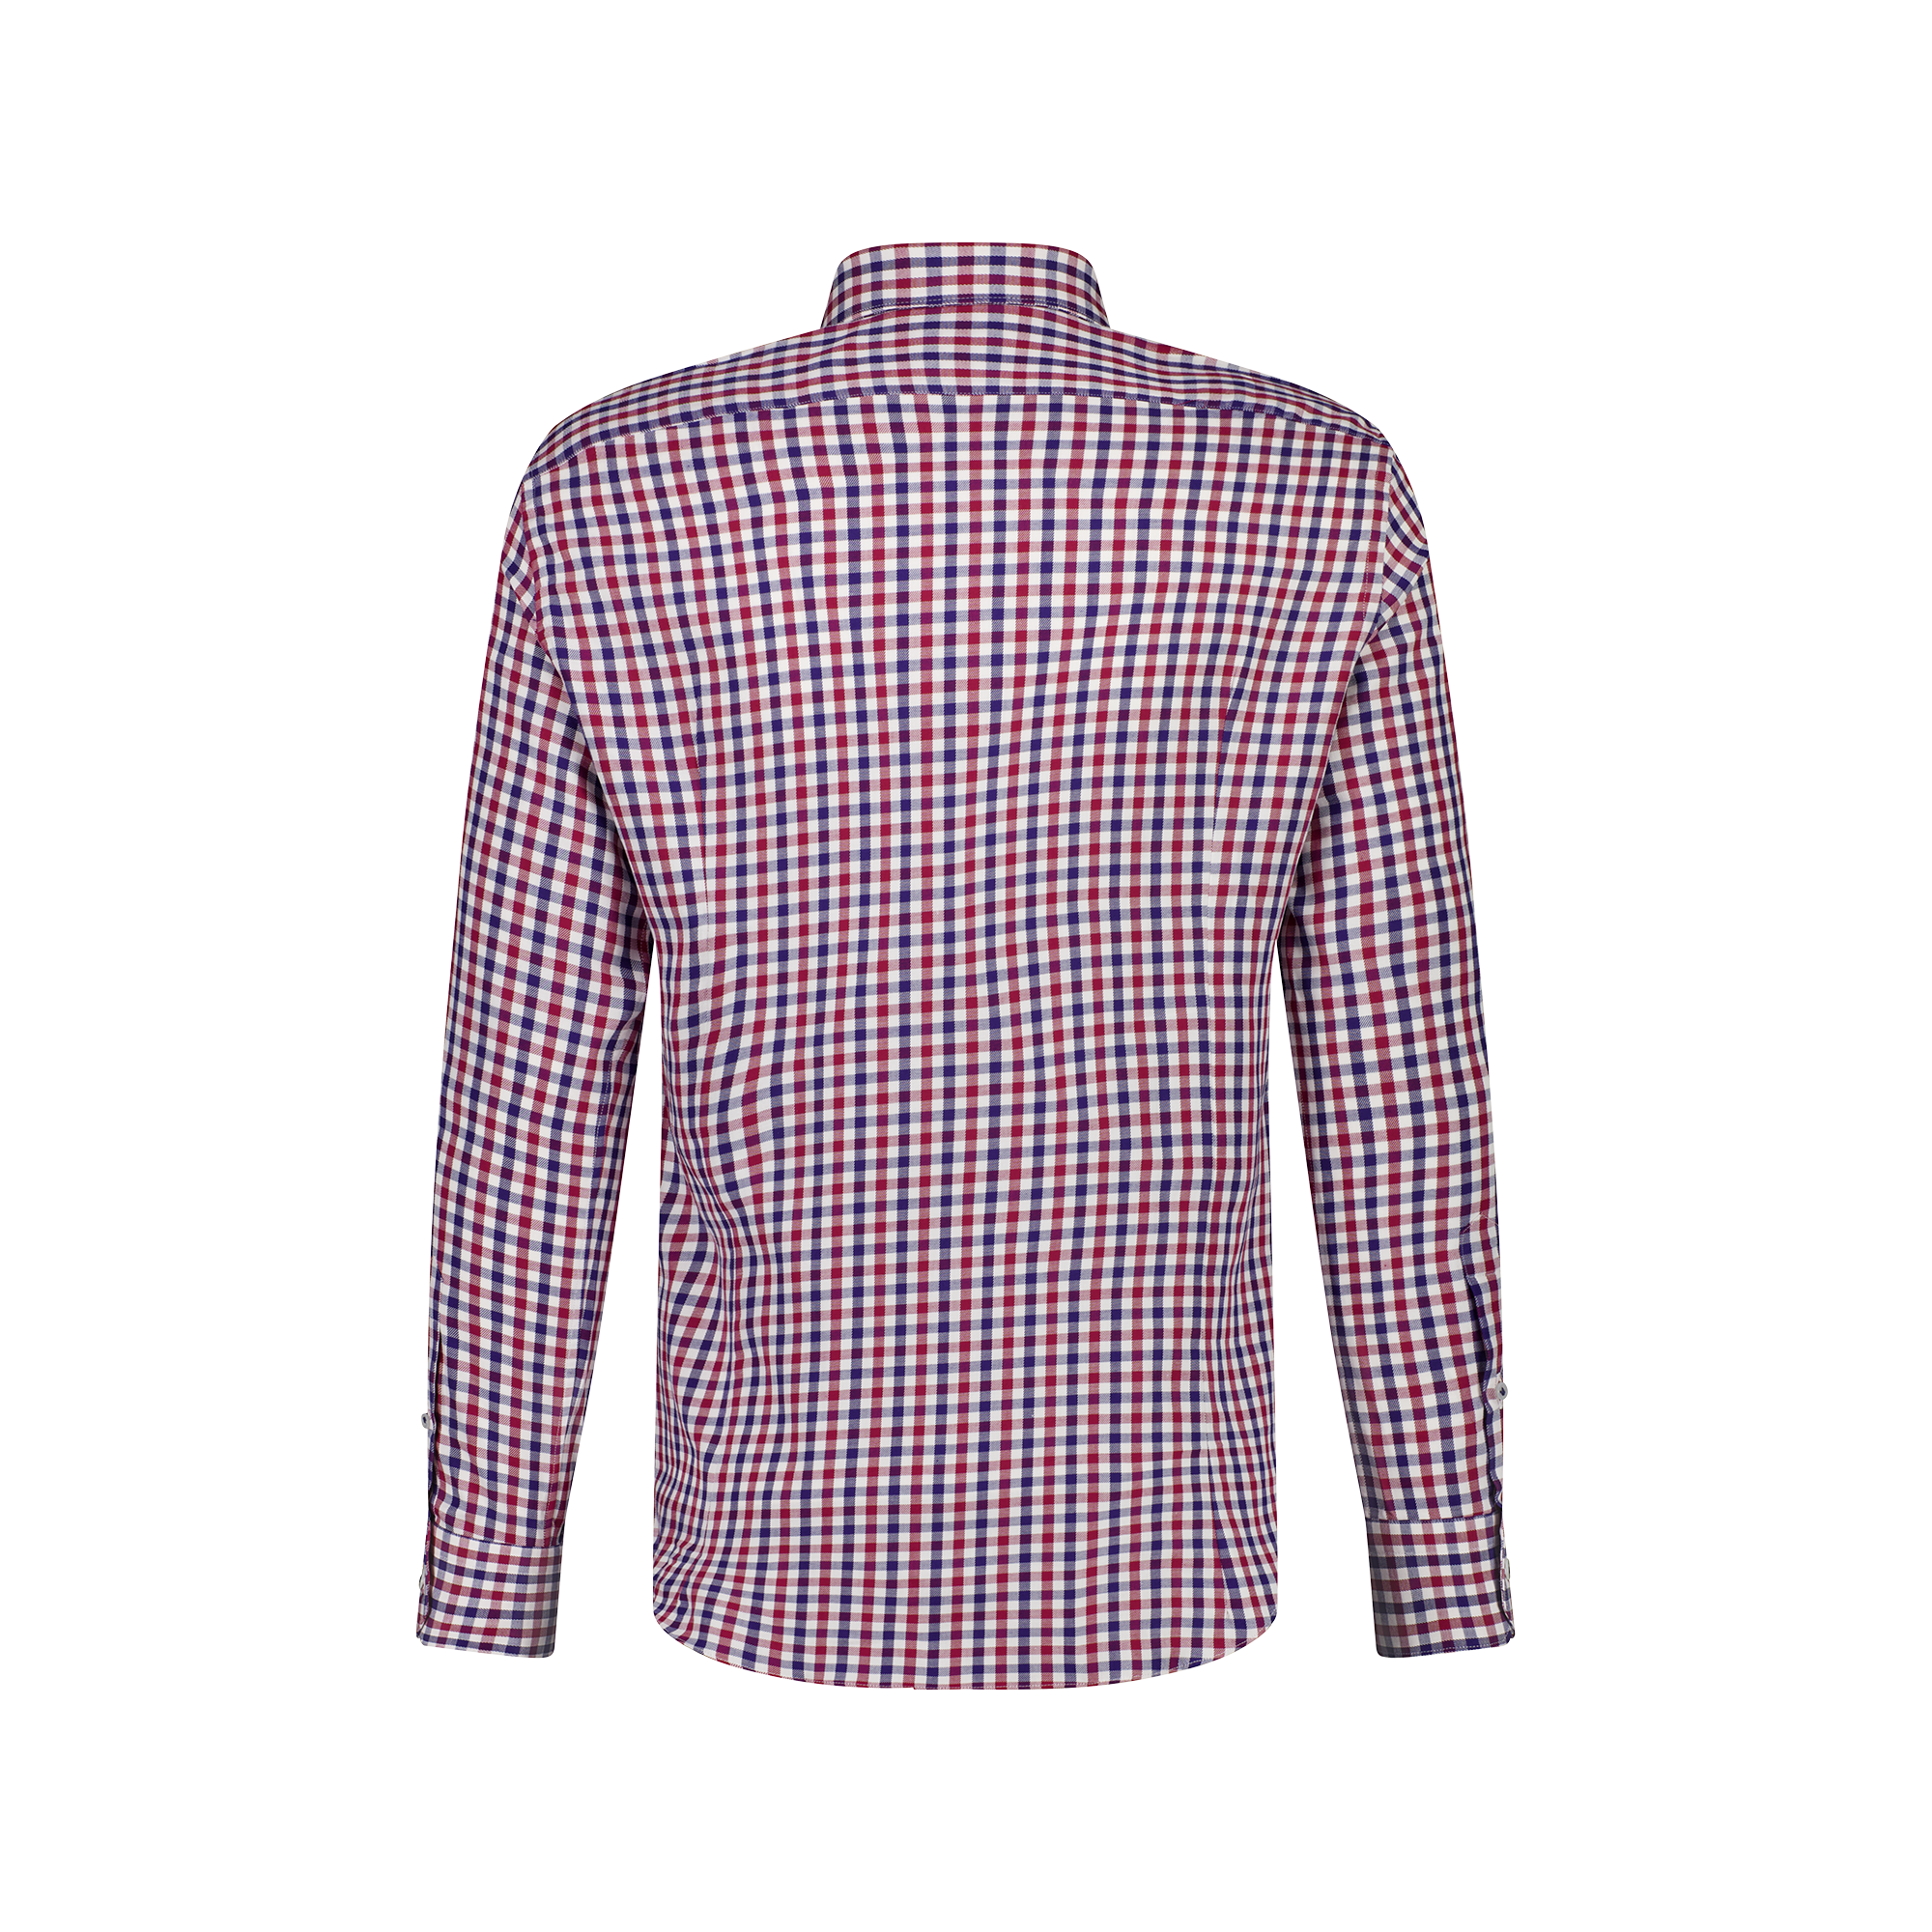 CORDONE Elegance Check Shirt NAVY/RED/MULTI